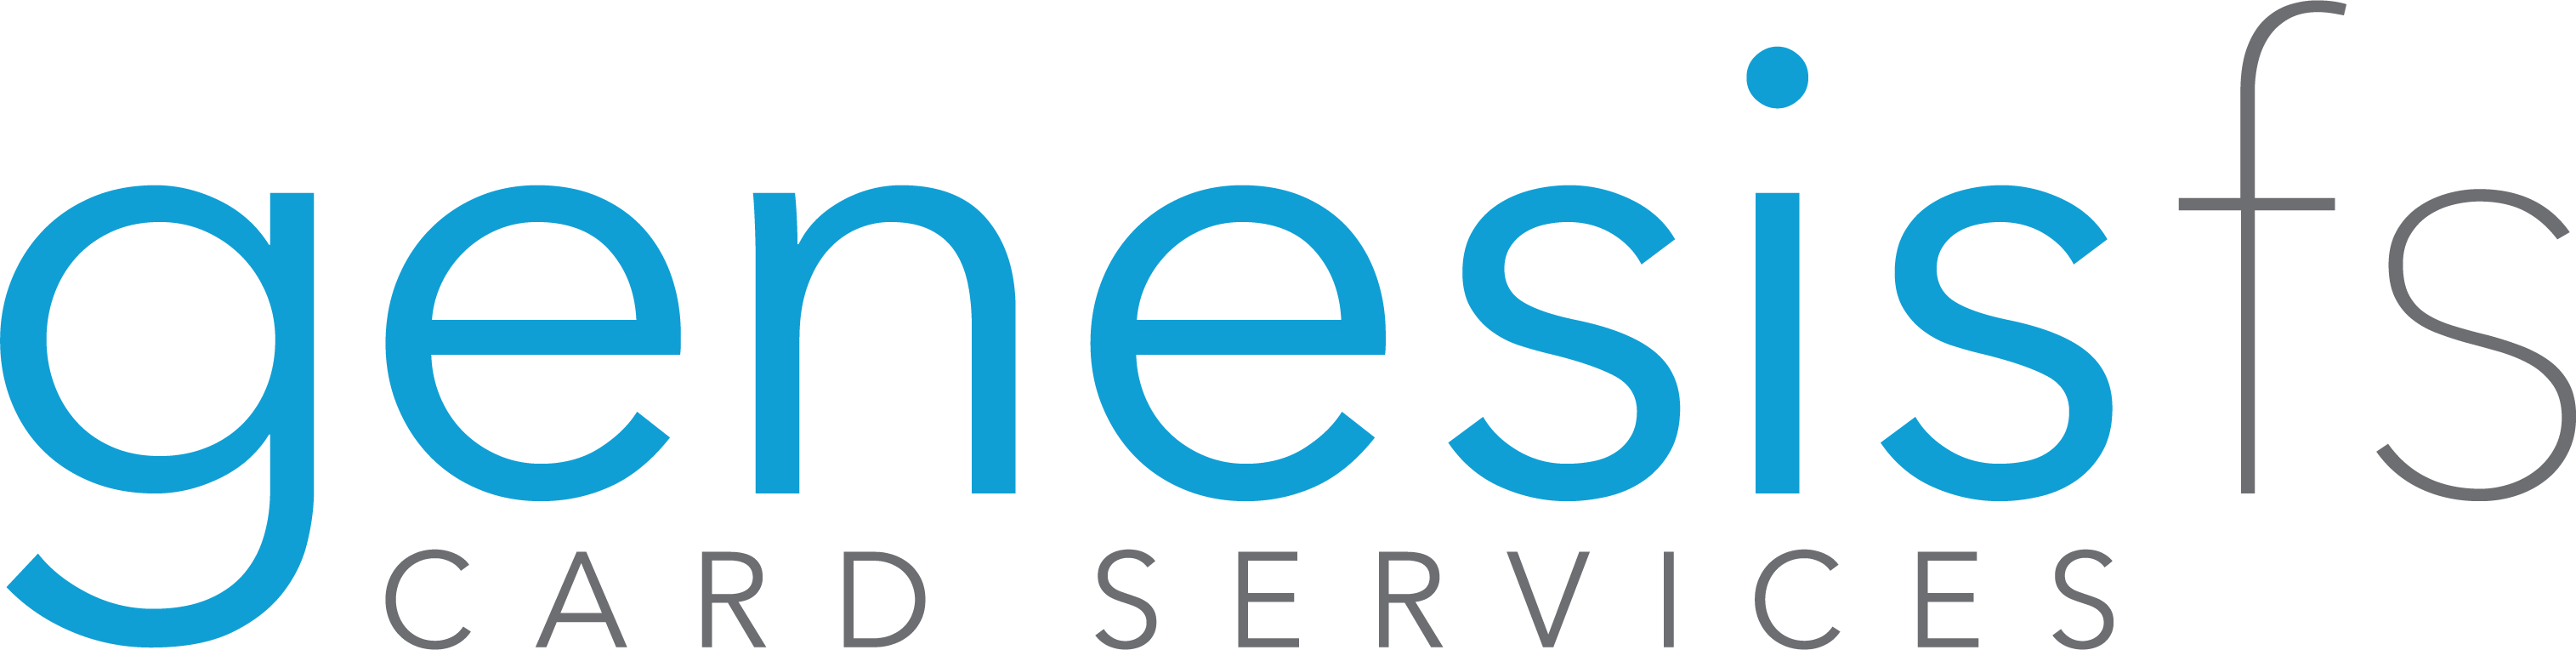 genesisfs card services logo